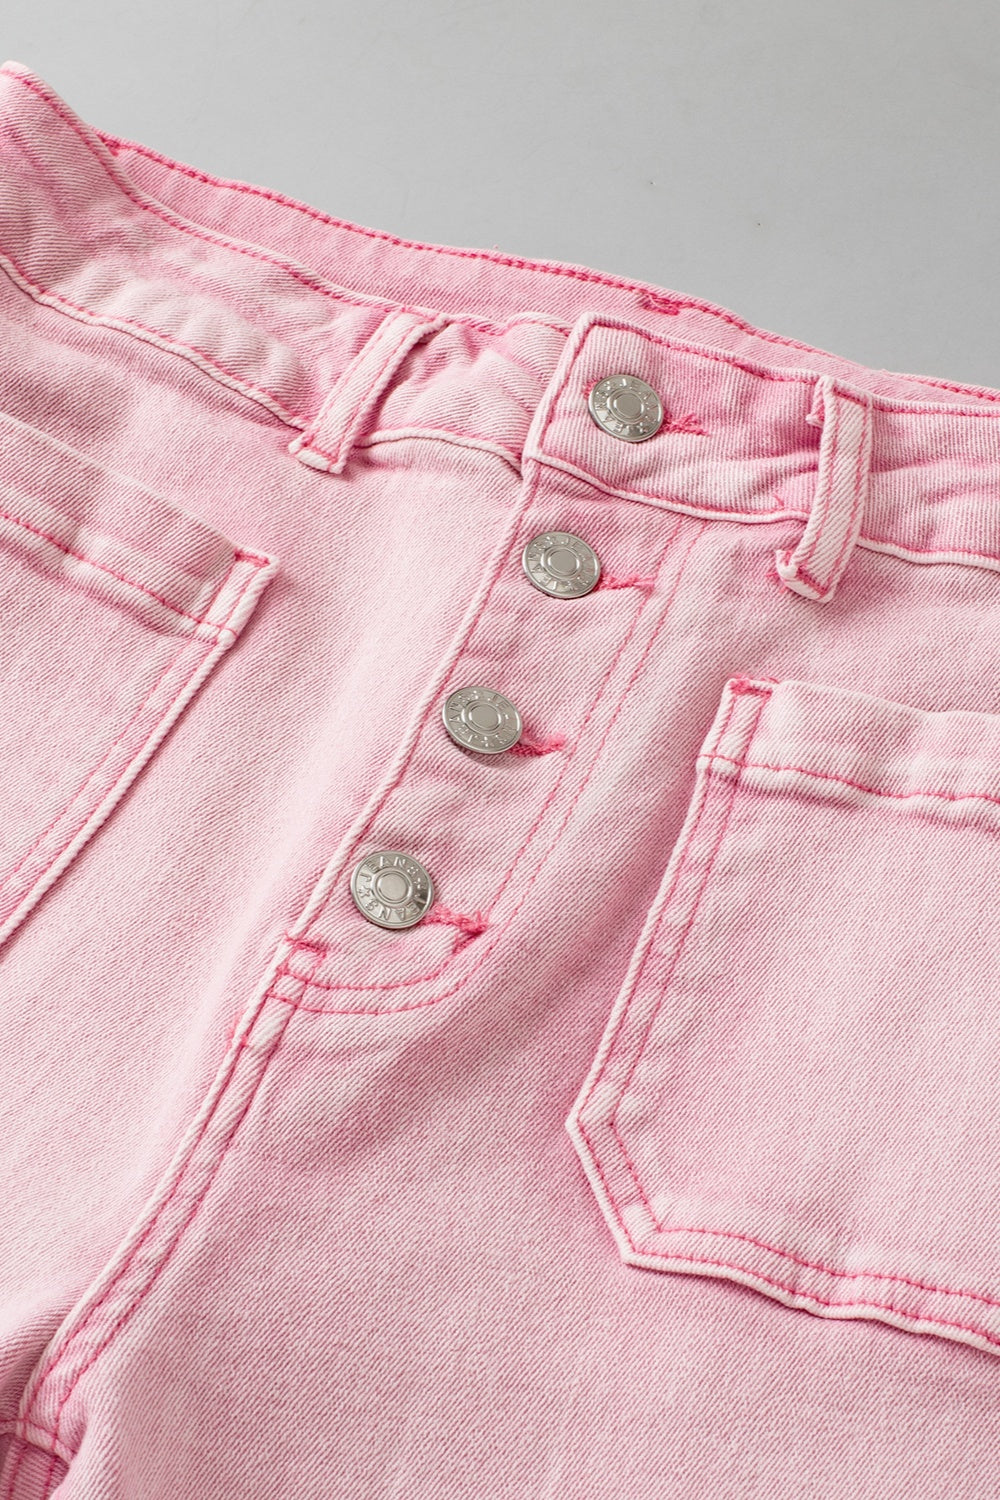 Raw Hem Button-Fly Jeans with Pockets - Thandynie